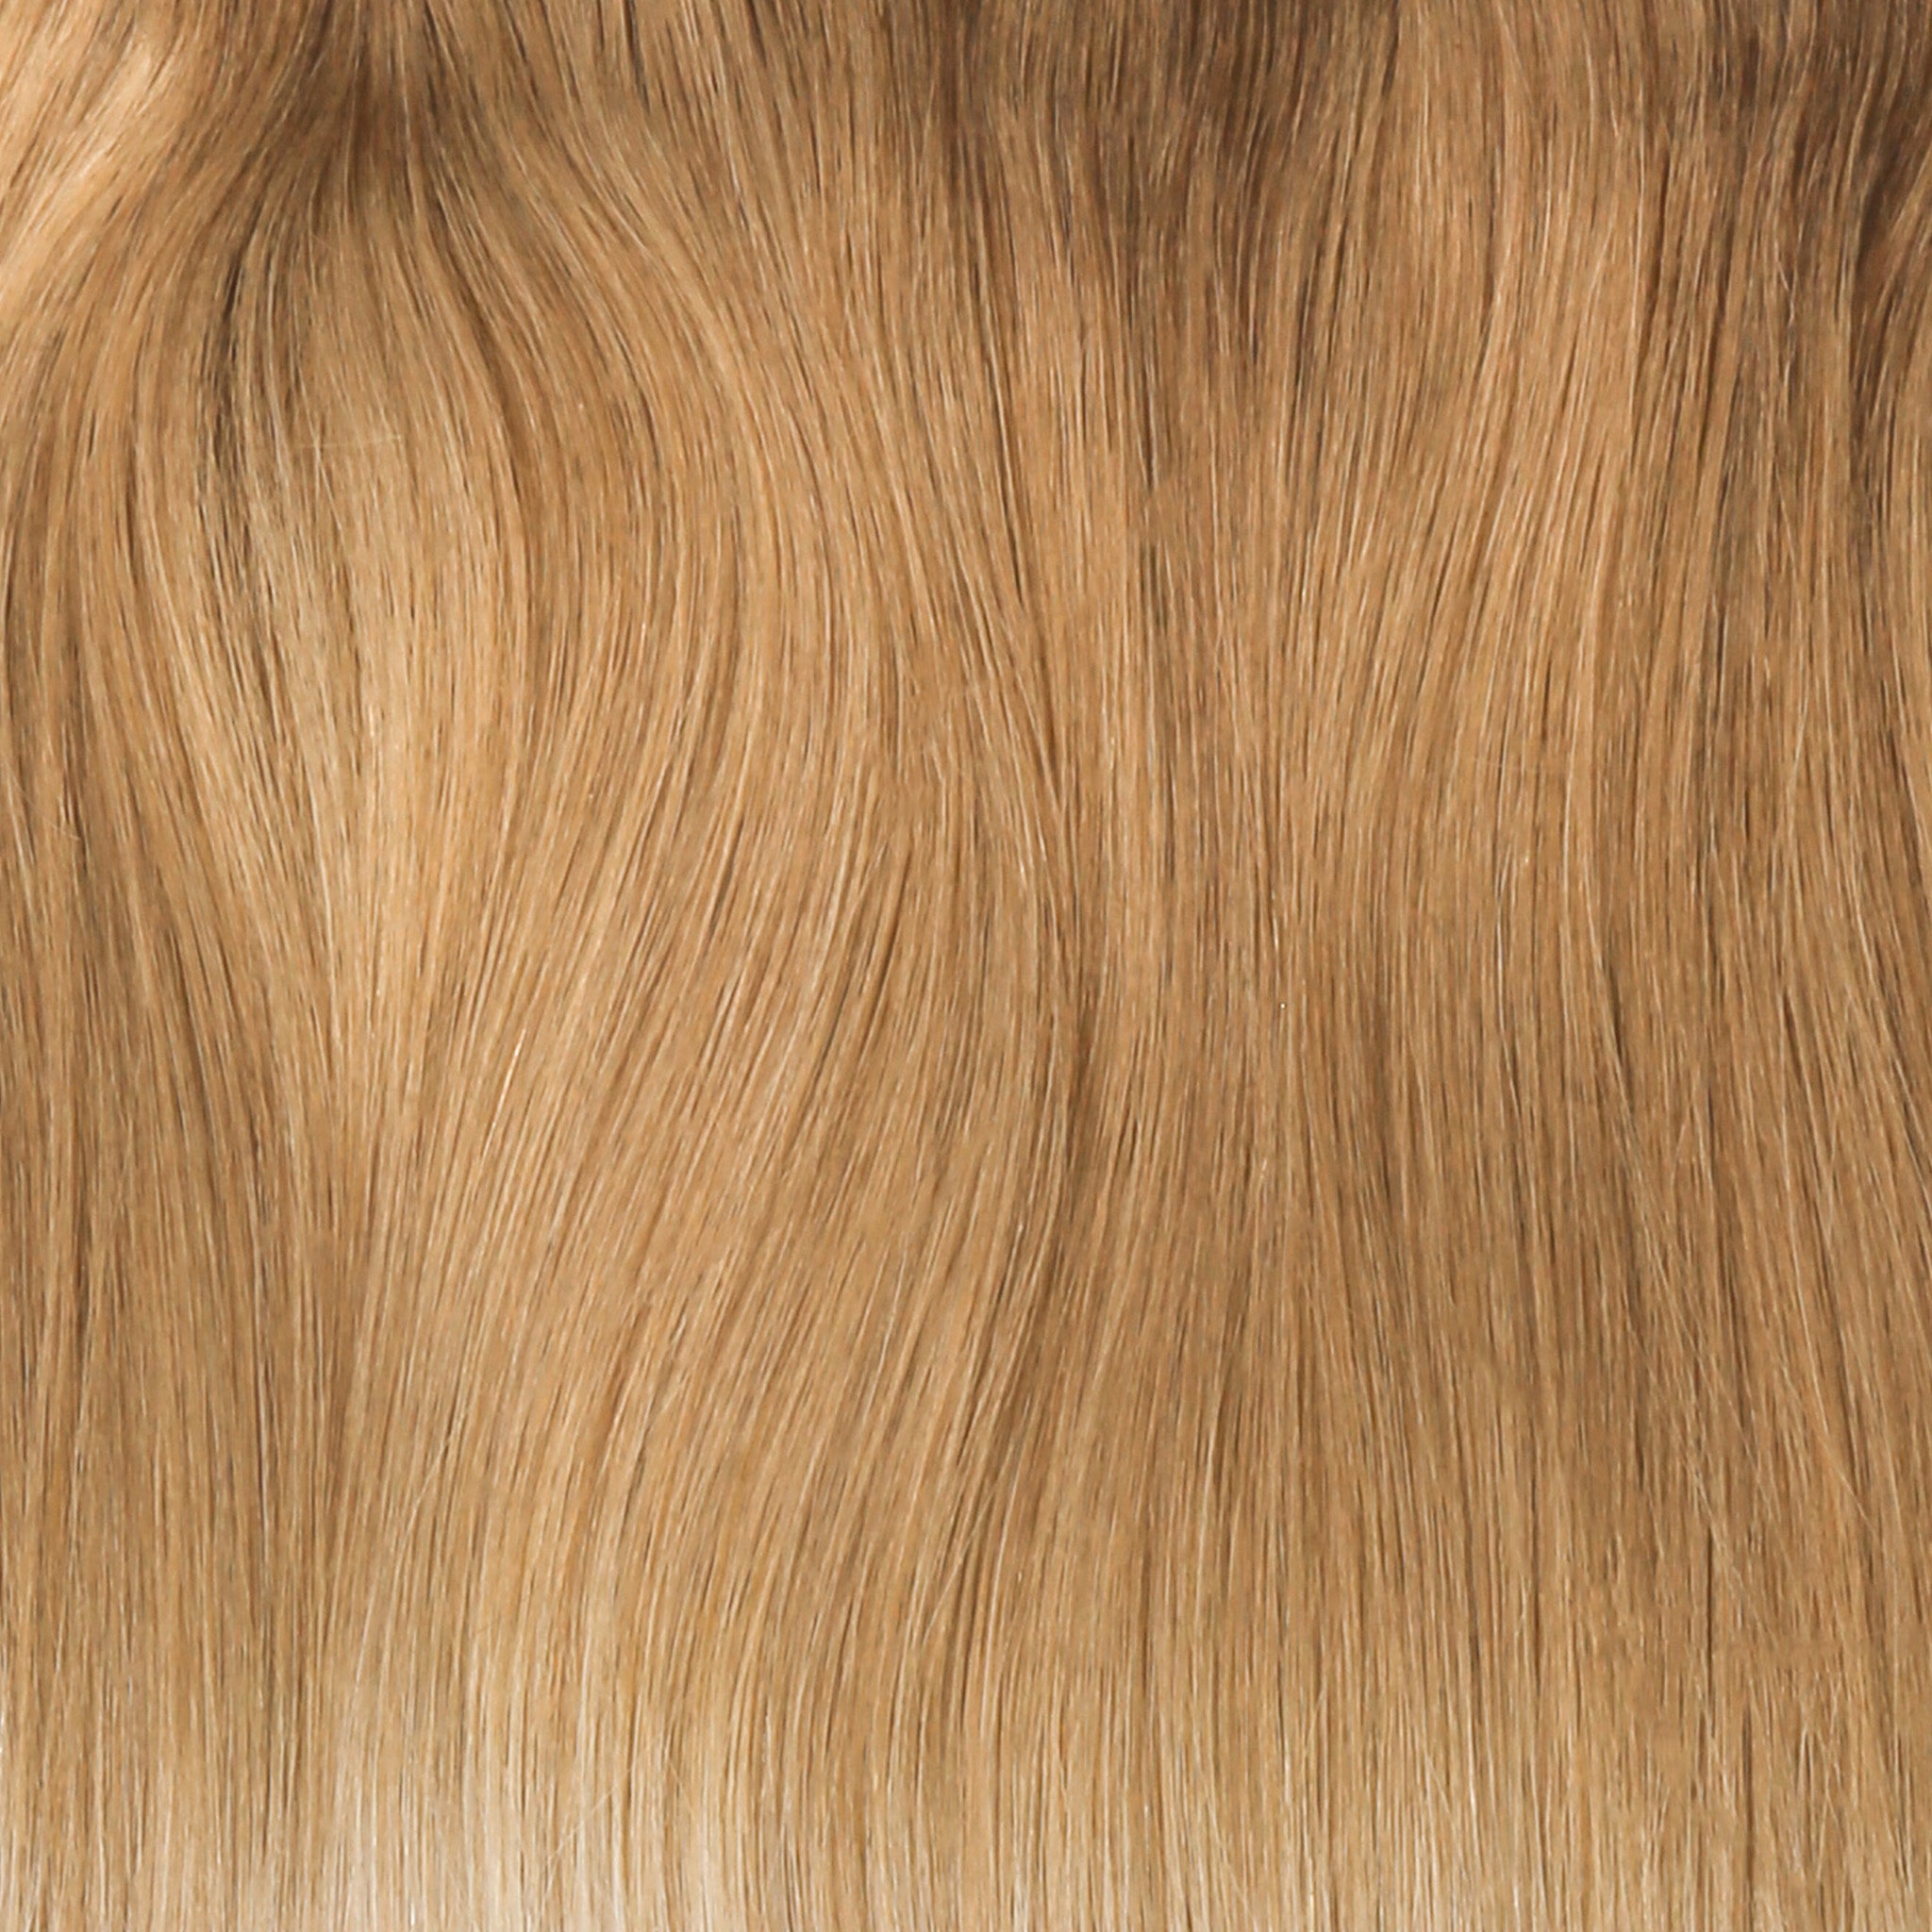 #8/24 Balayage Aura Hair Extension